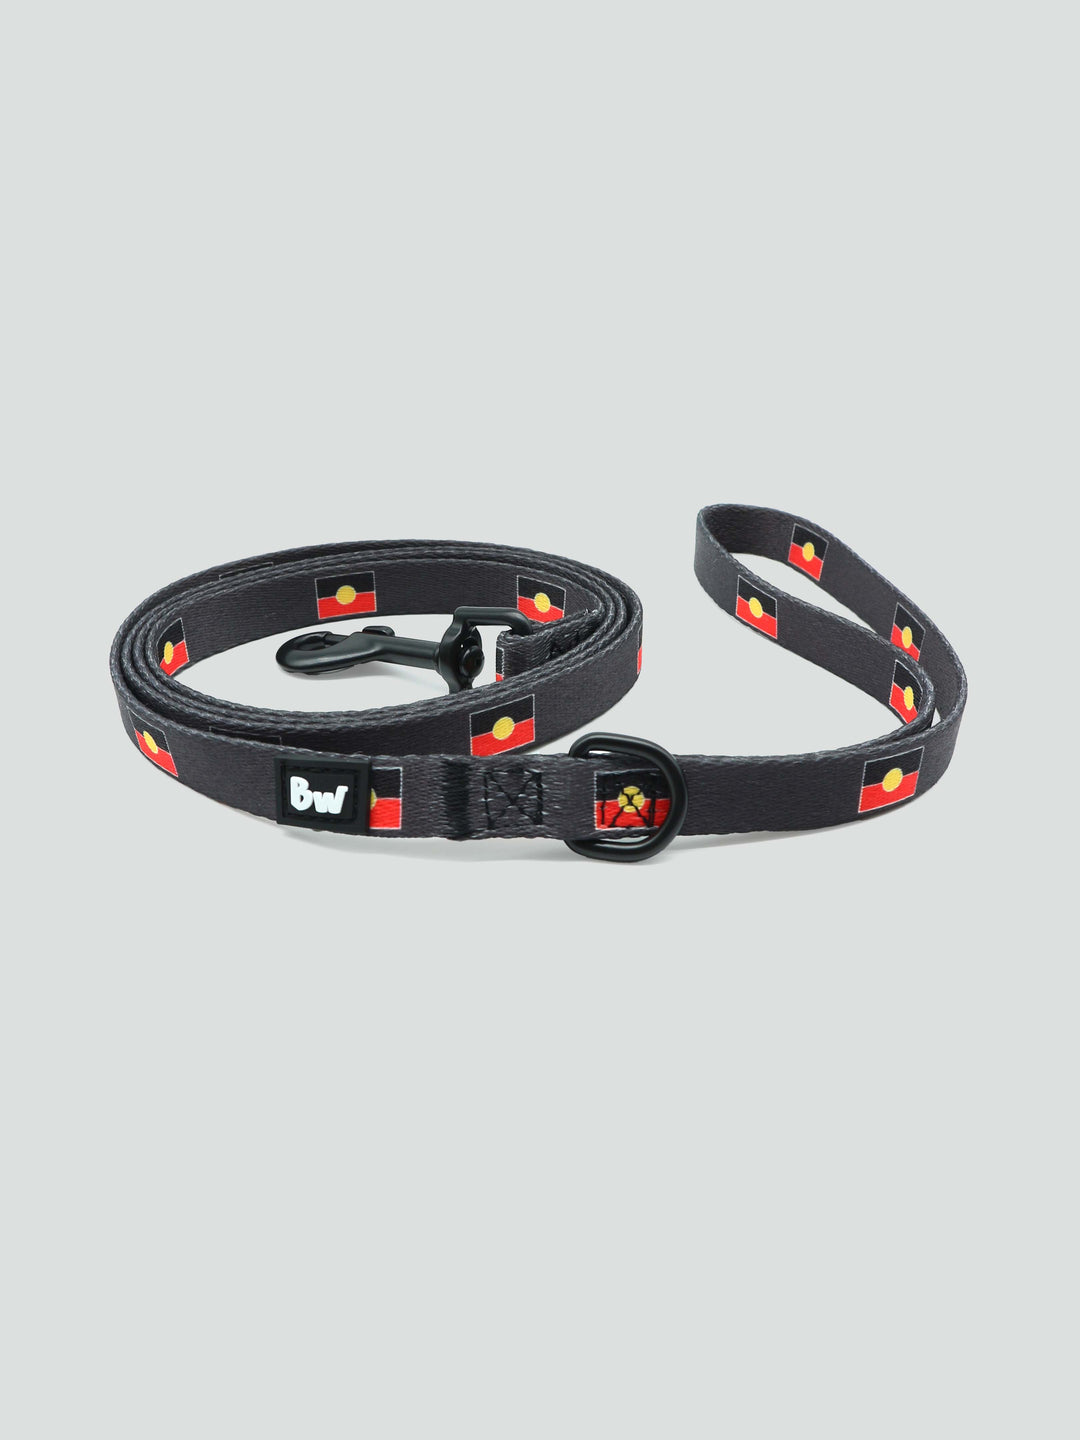 Aboriginal Flag - Dog Collar and Dog Leash Set